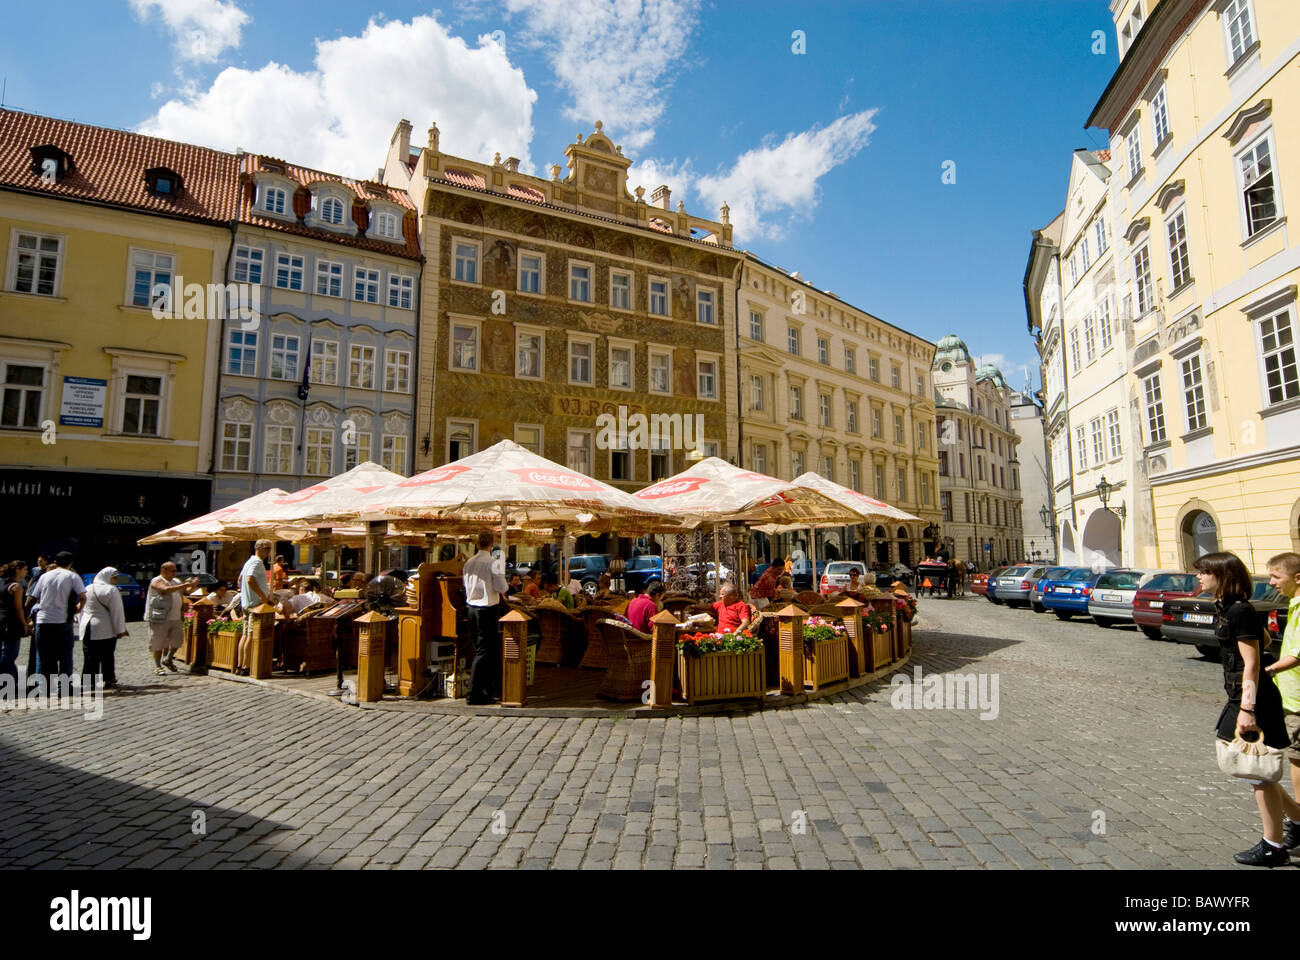 Cafe, Male Namesti, U Rotta, Old Town, Prague, Czech Republic, Europe Stock Photo